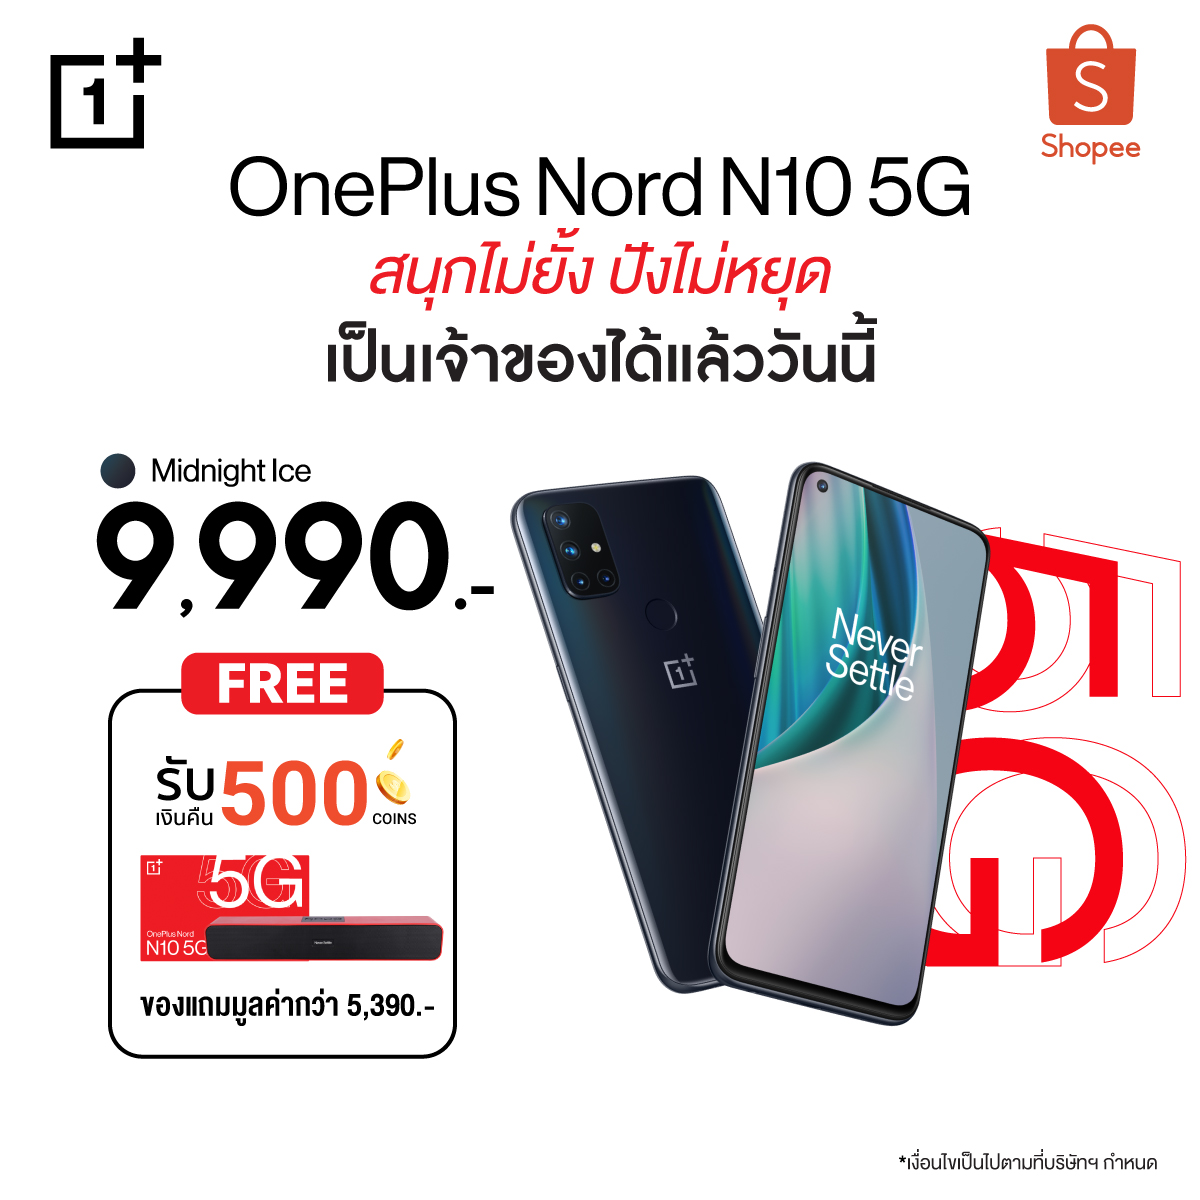 Shopee N10 | 5G | รีวิว OnePlus Nord N10 5G สเปคครบ กล้องชัด 64ล้าน สมาร์ทโฟน 5G ระบบดี ในราคาไม่ถึงหมื่น